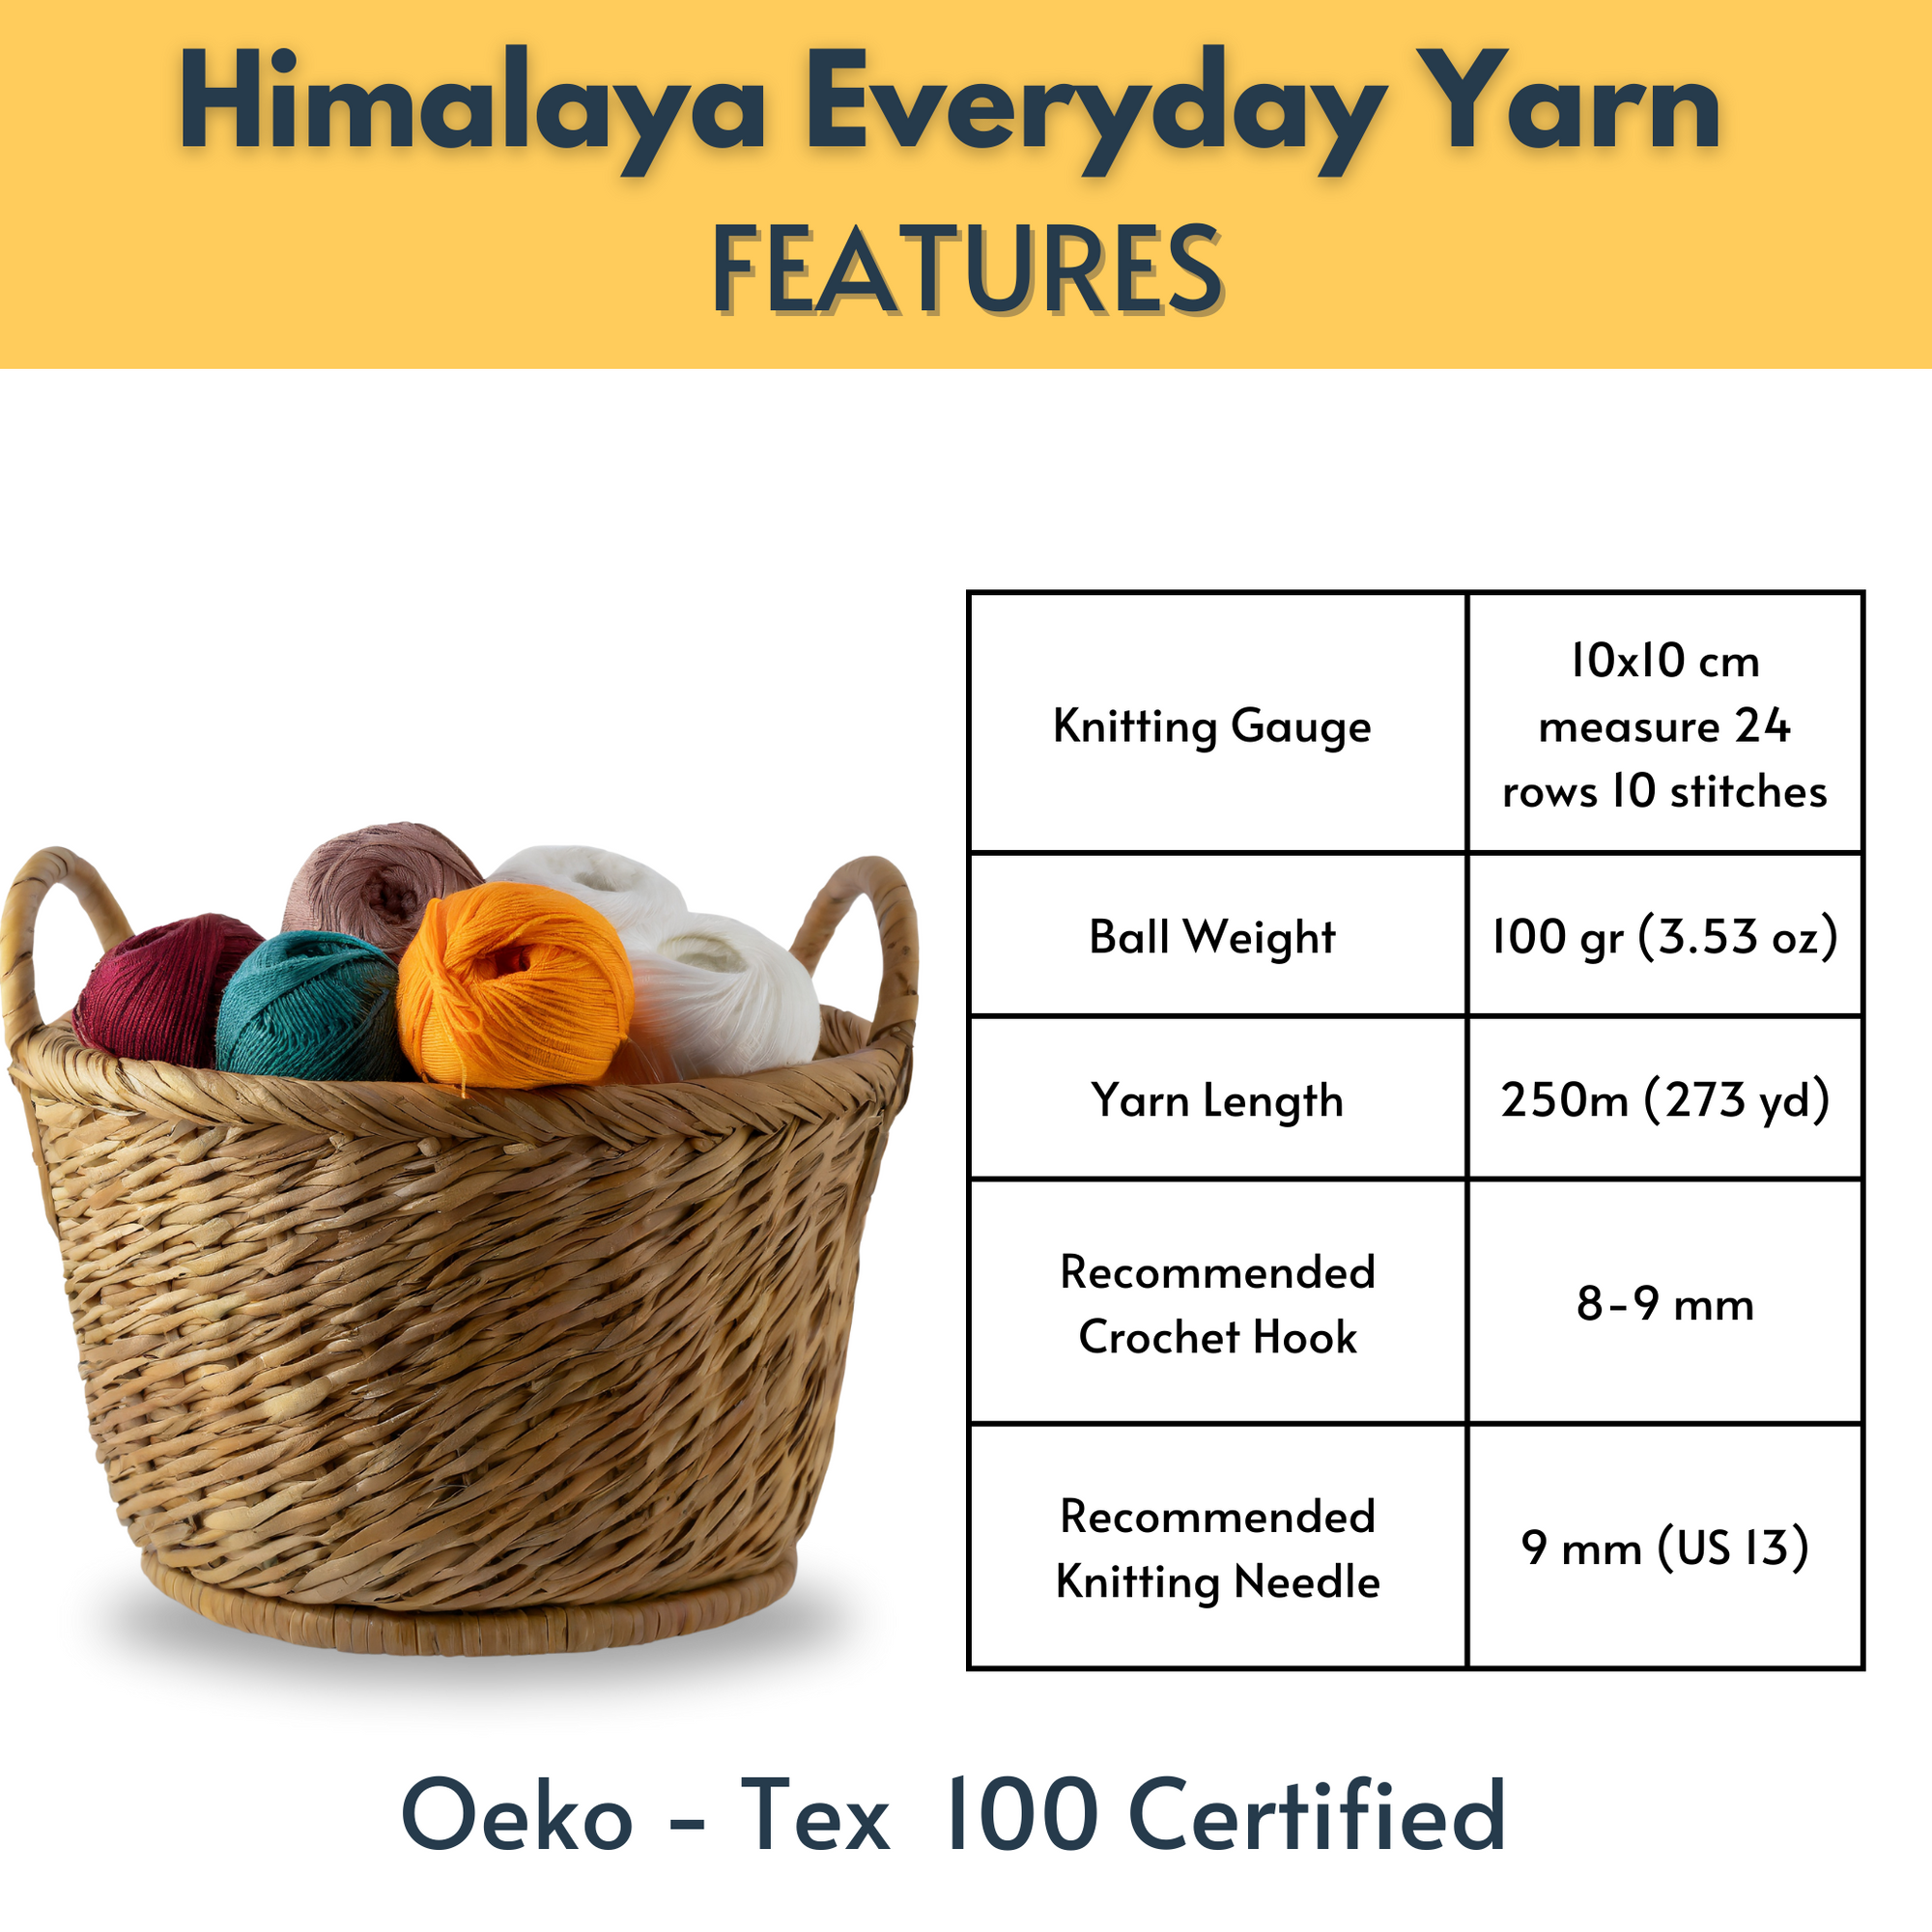 Himalaya Everyday 100% Anti-Pilling Acrylic Yarn, Grey - 70809